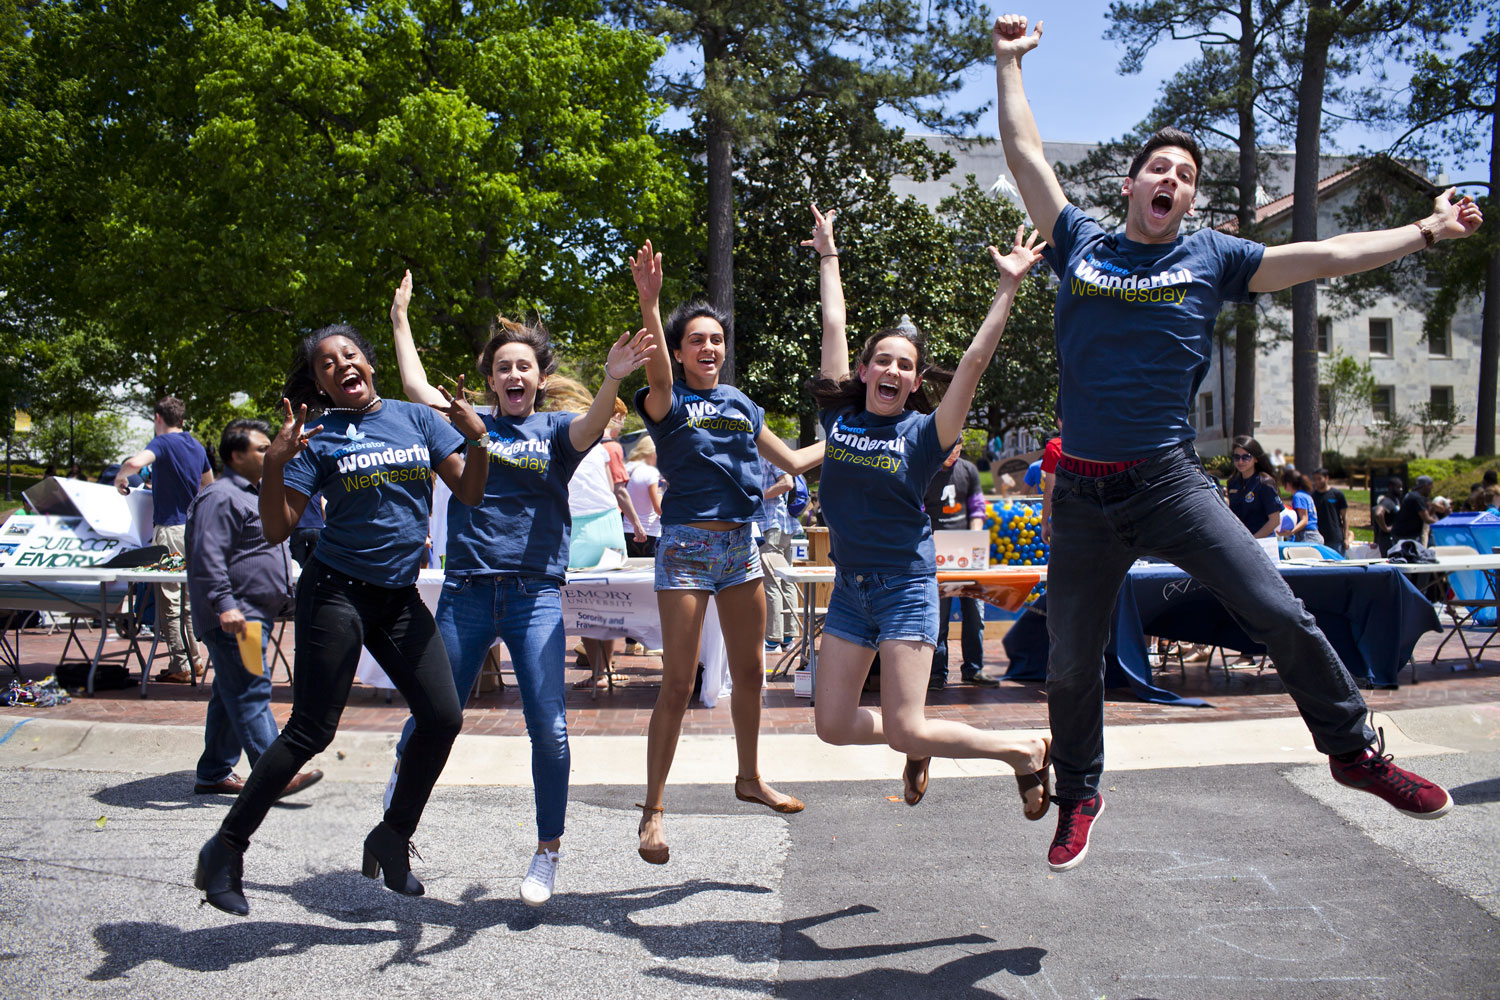 Students jump for joy